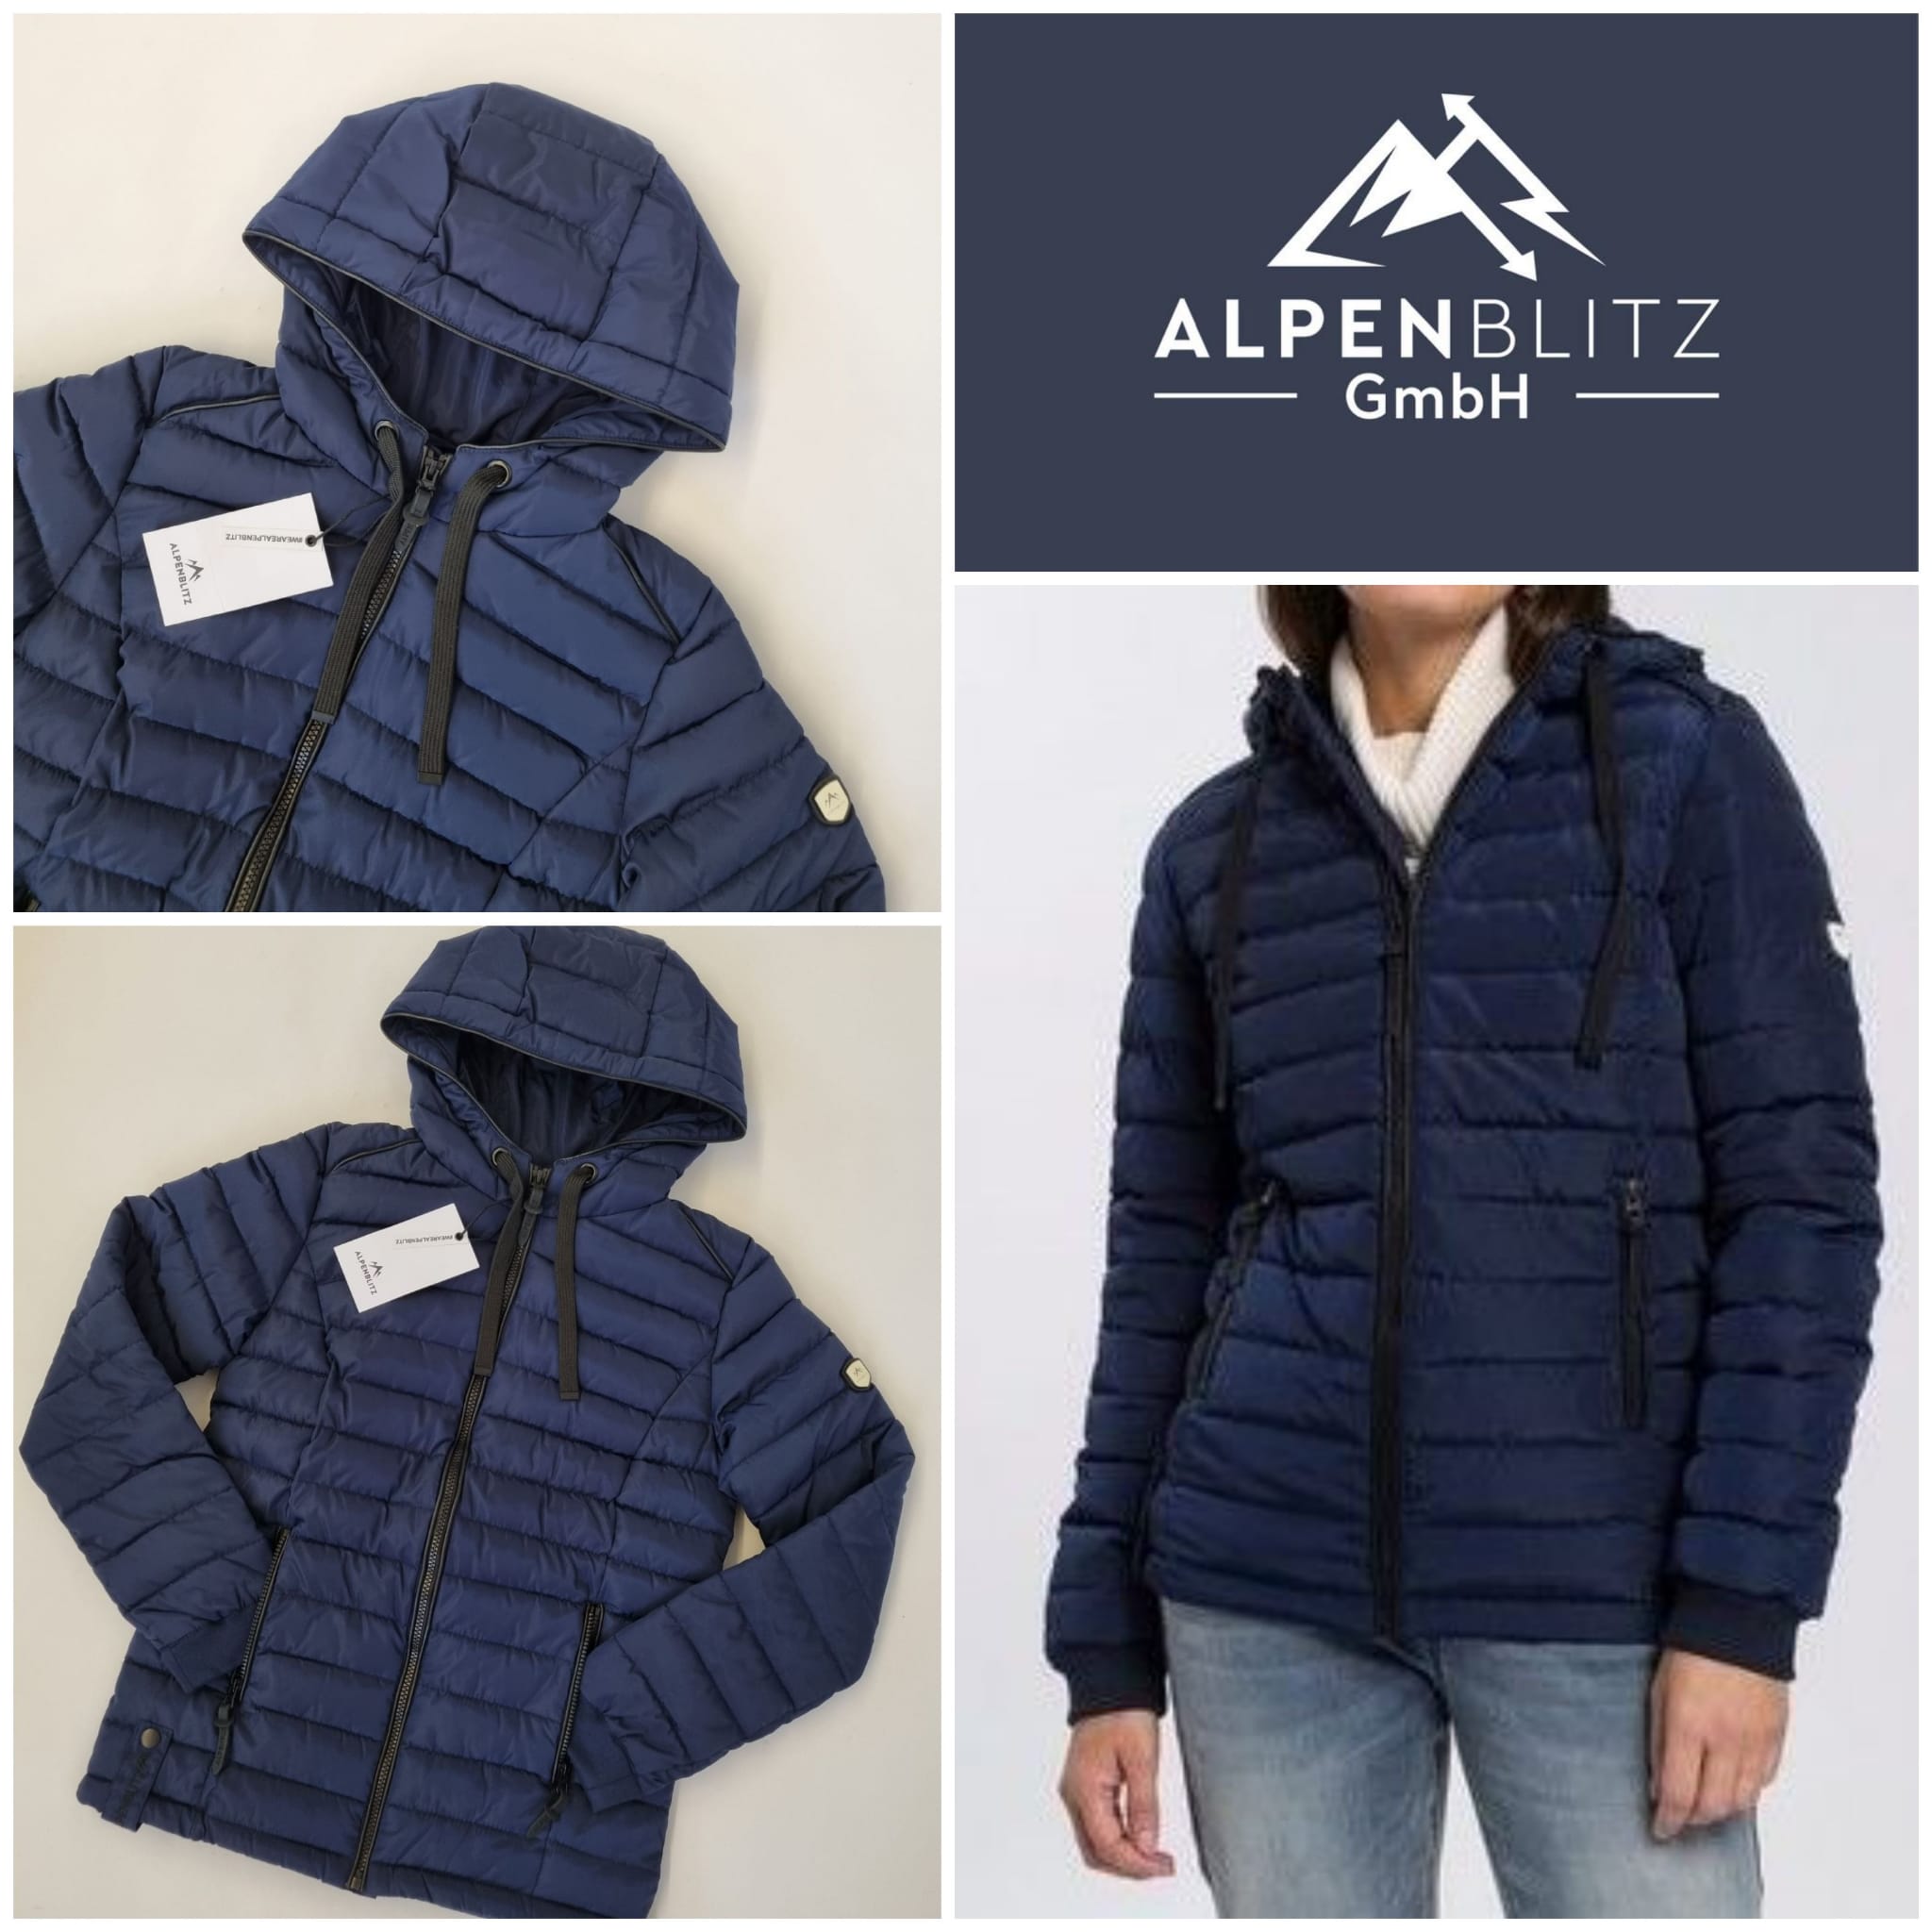 Women's blue jacket from Alpenblitz